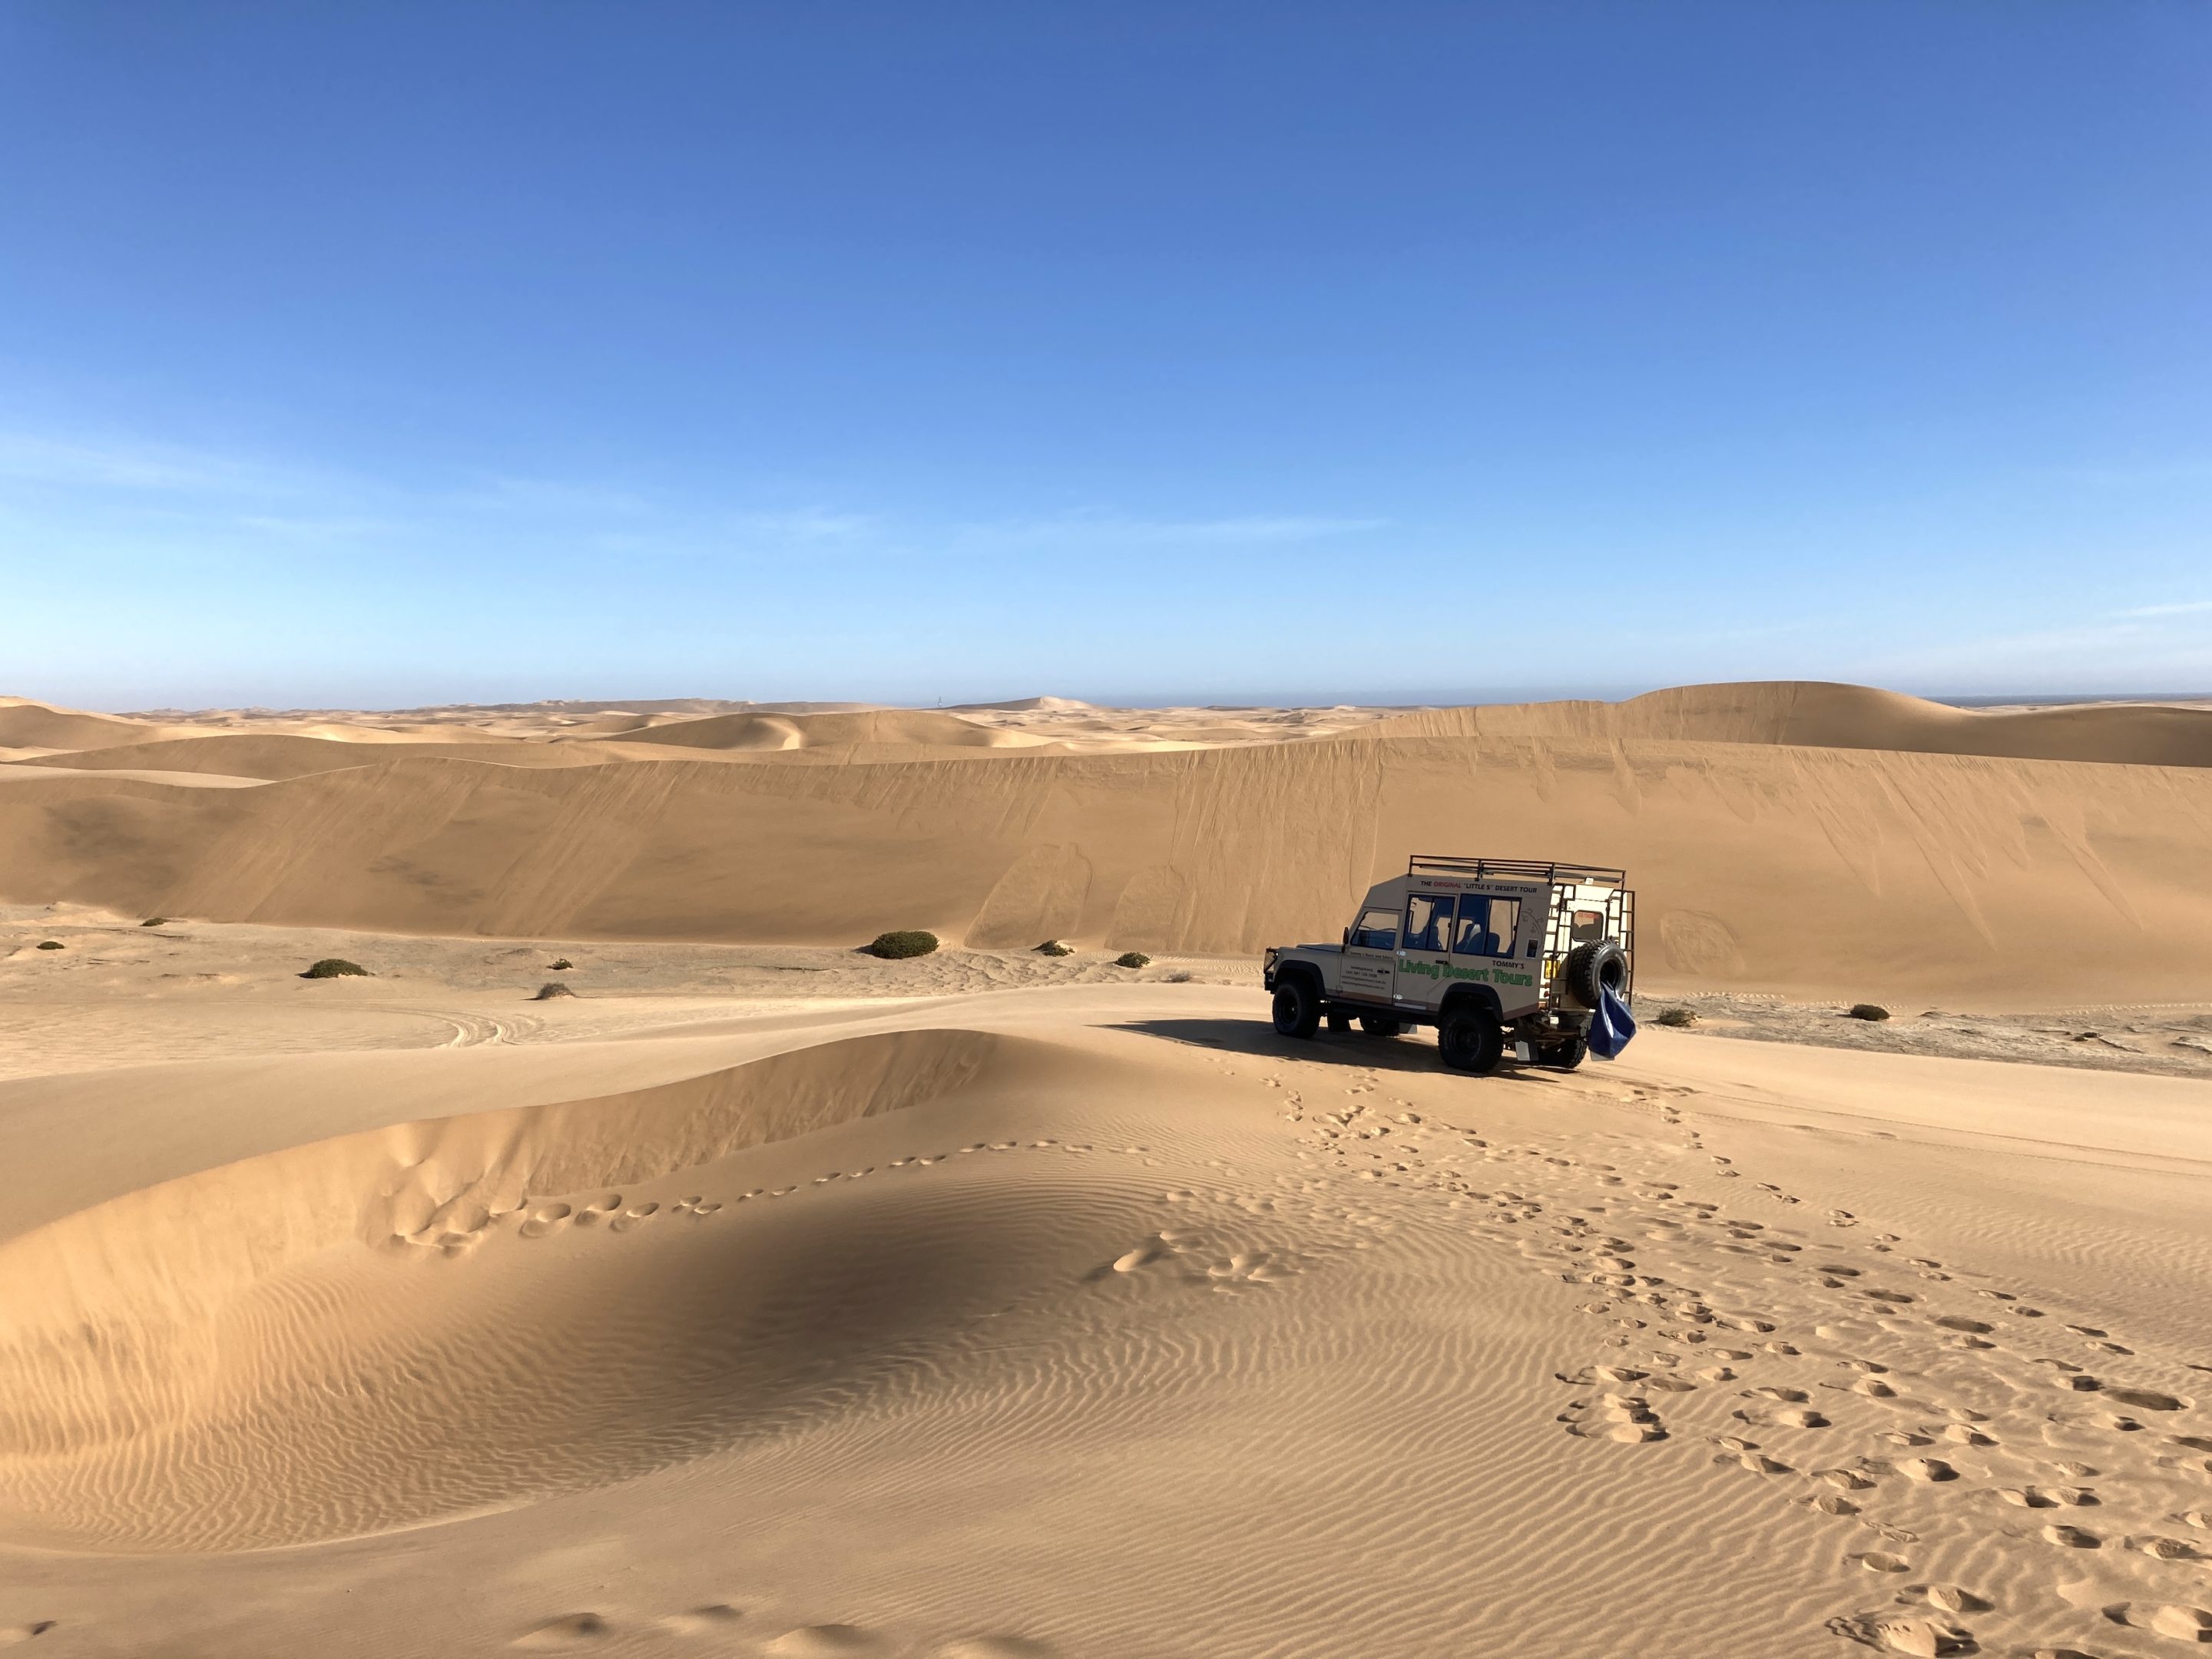 dune scenery in Namibia